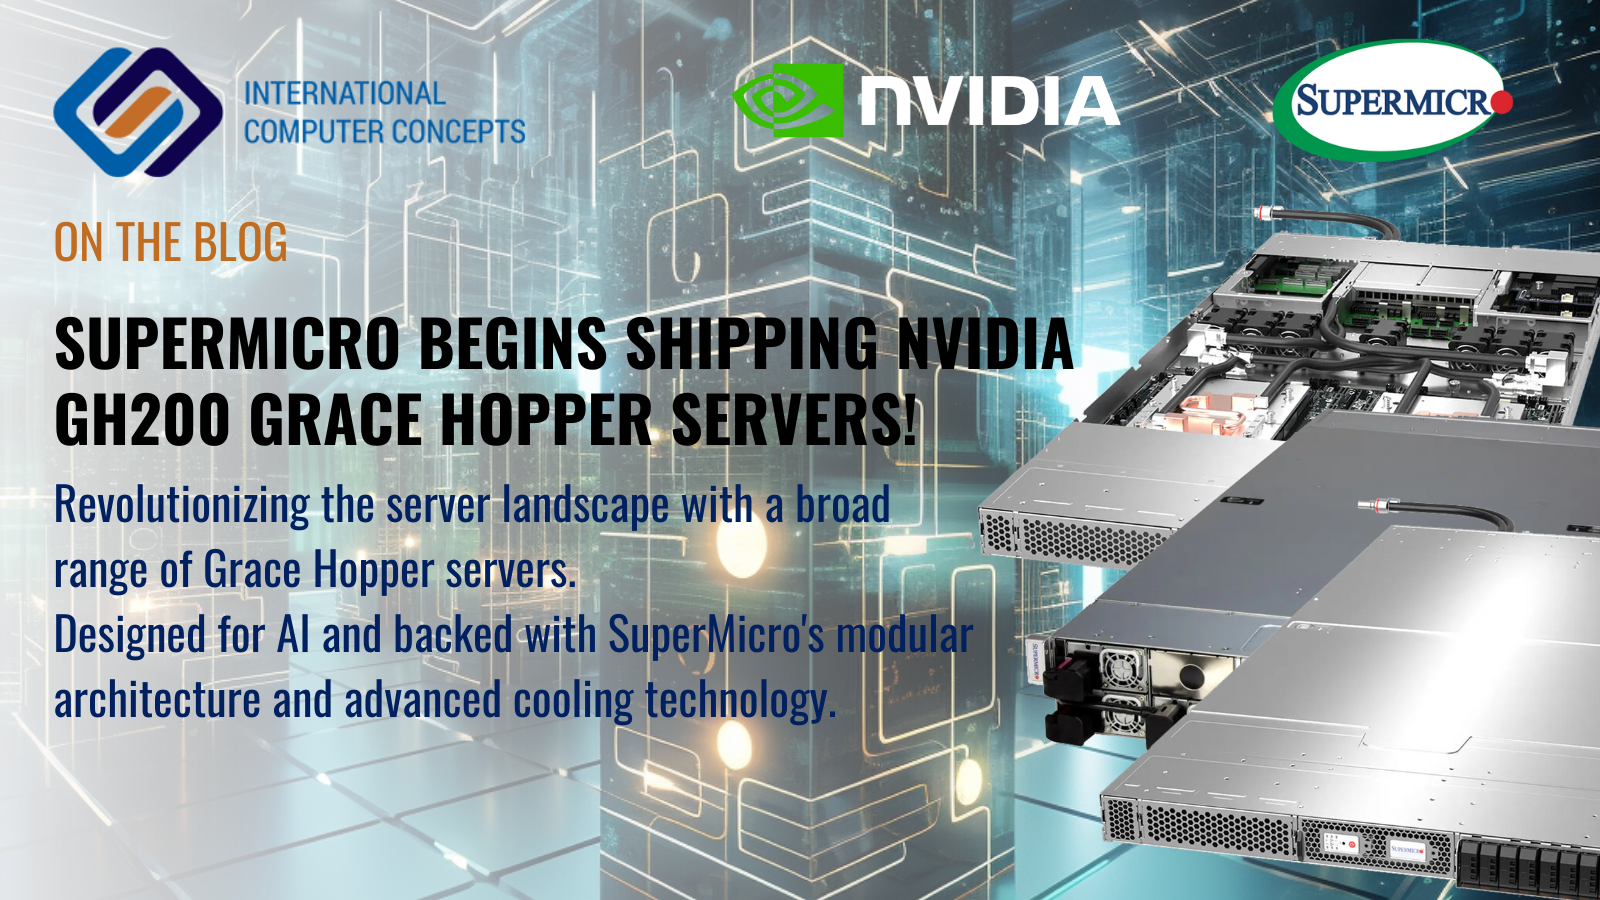  SuperMicro begins shipping NVIDIA GH200 Grace Hopper Servers